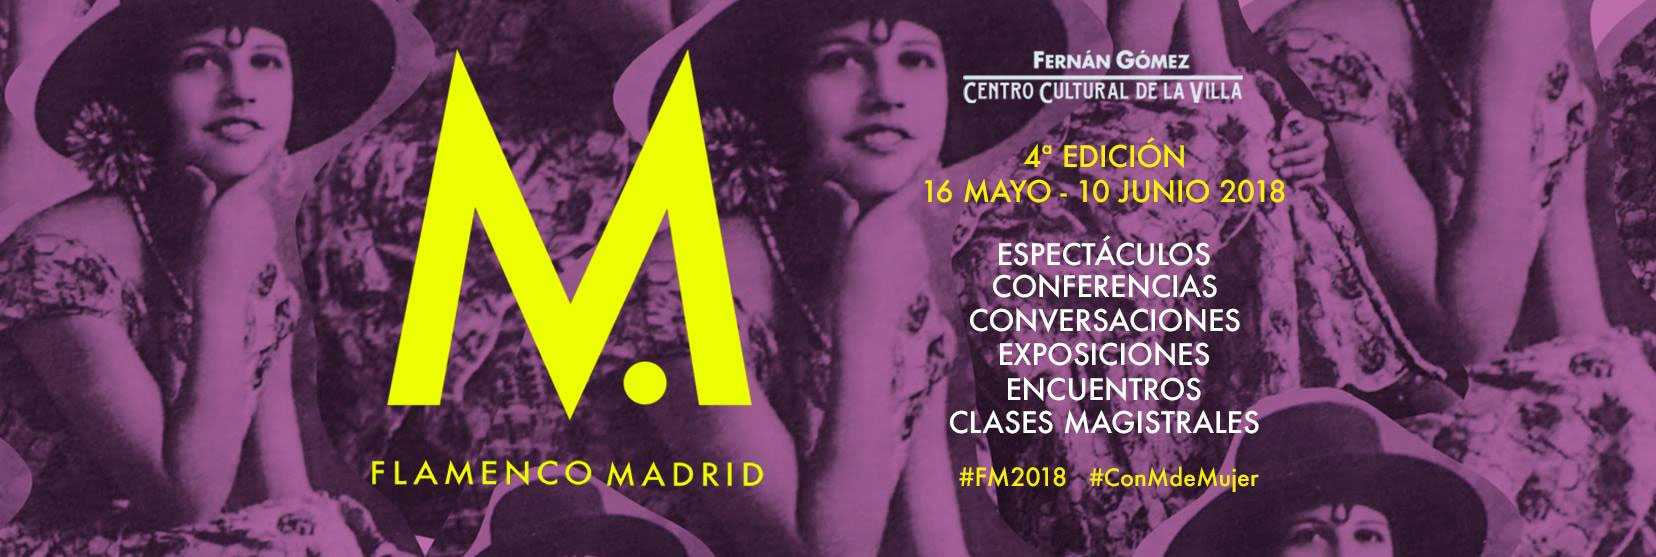 Flamenco Madrid 2018